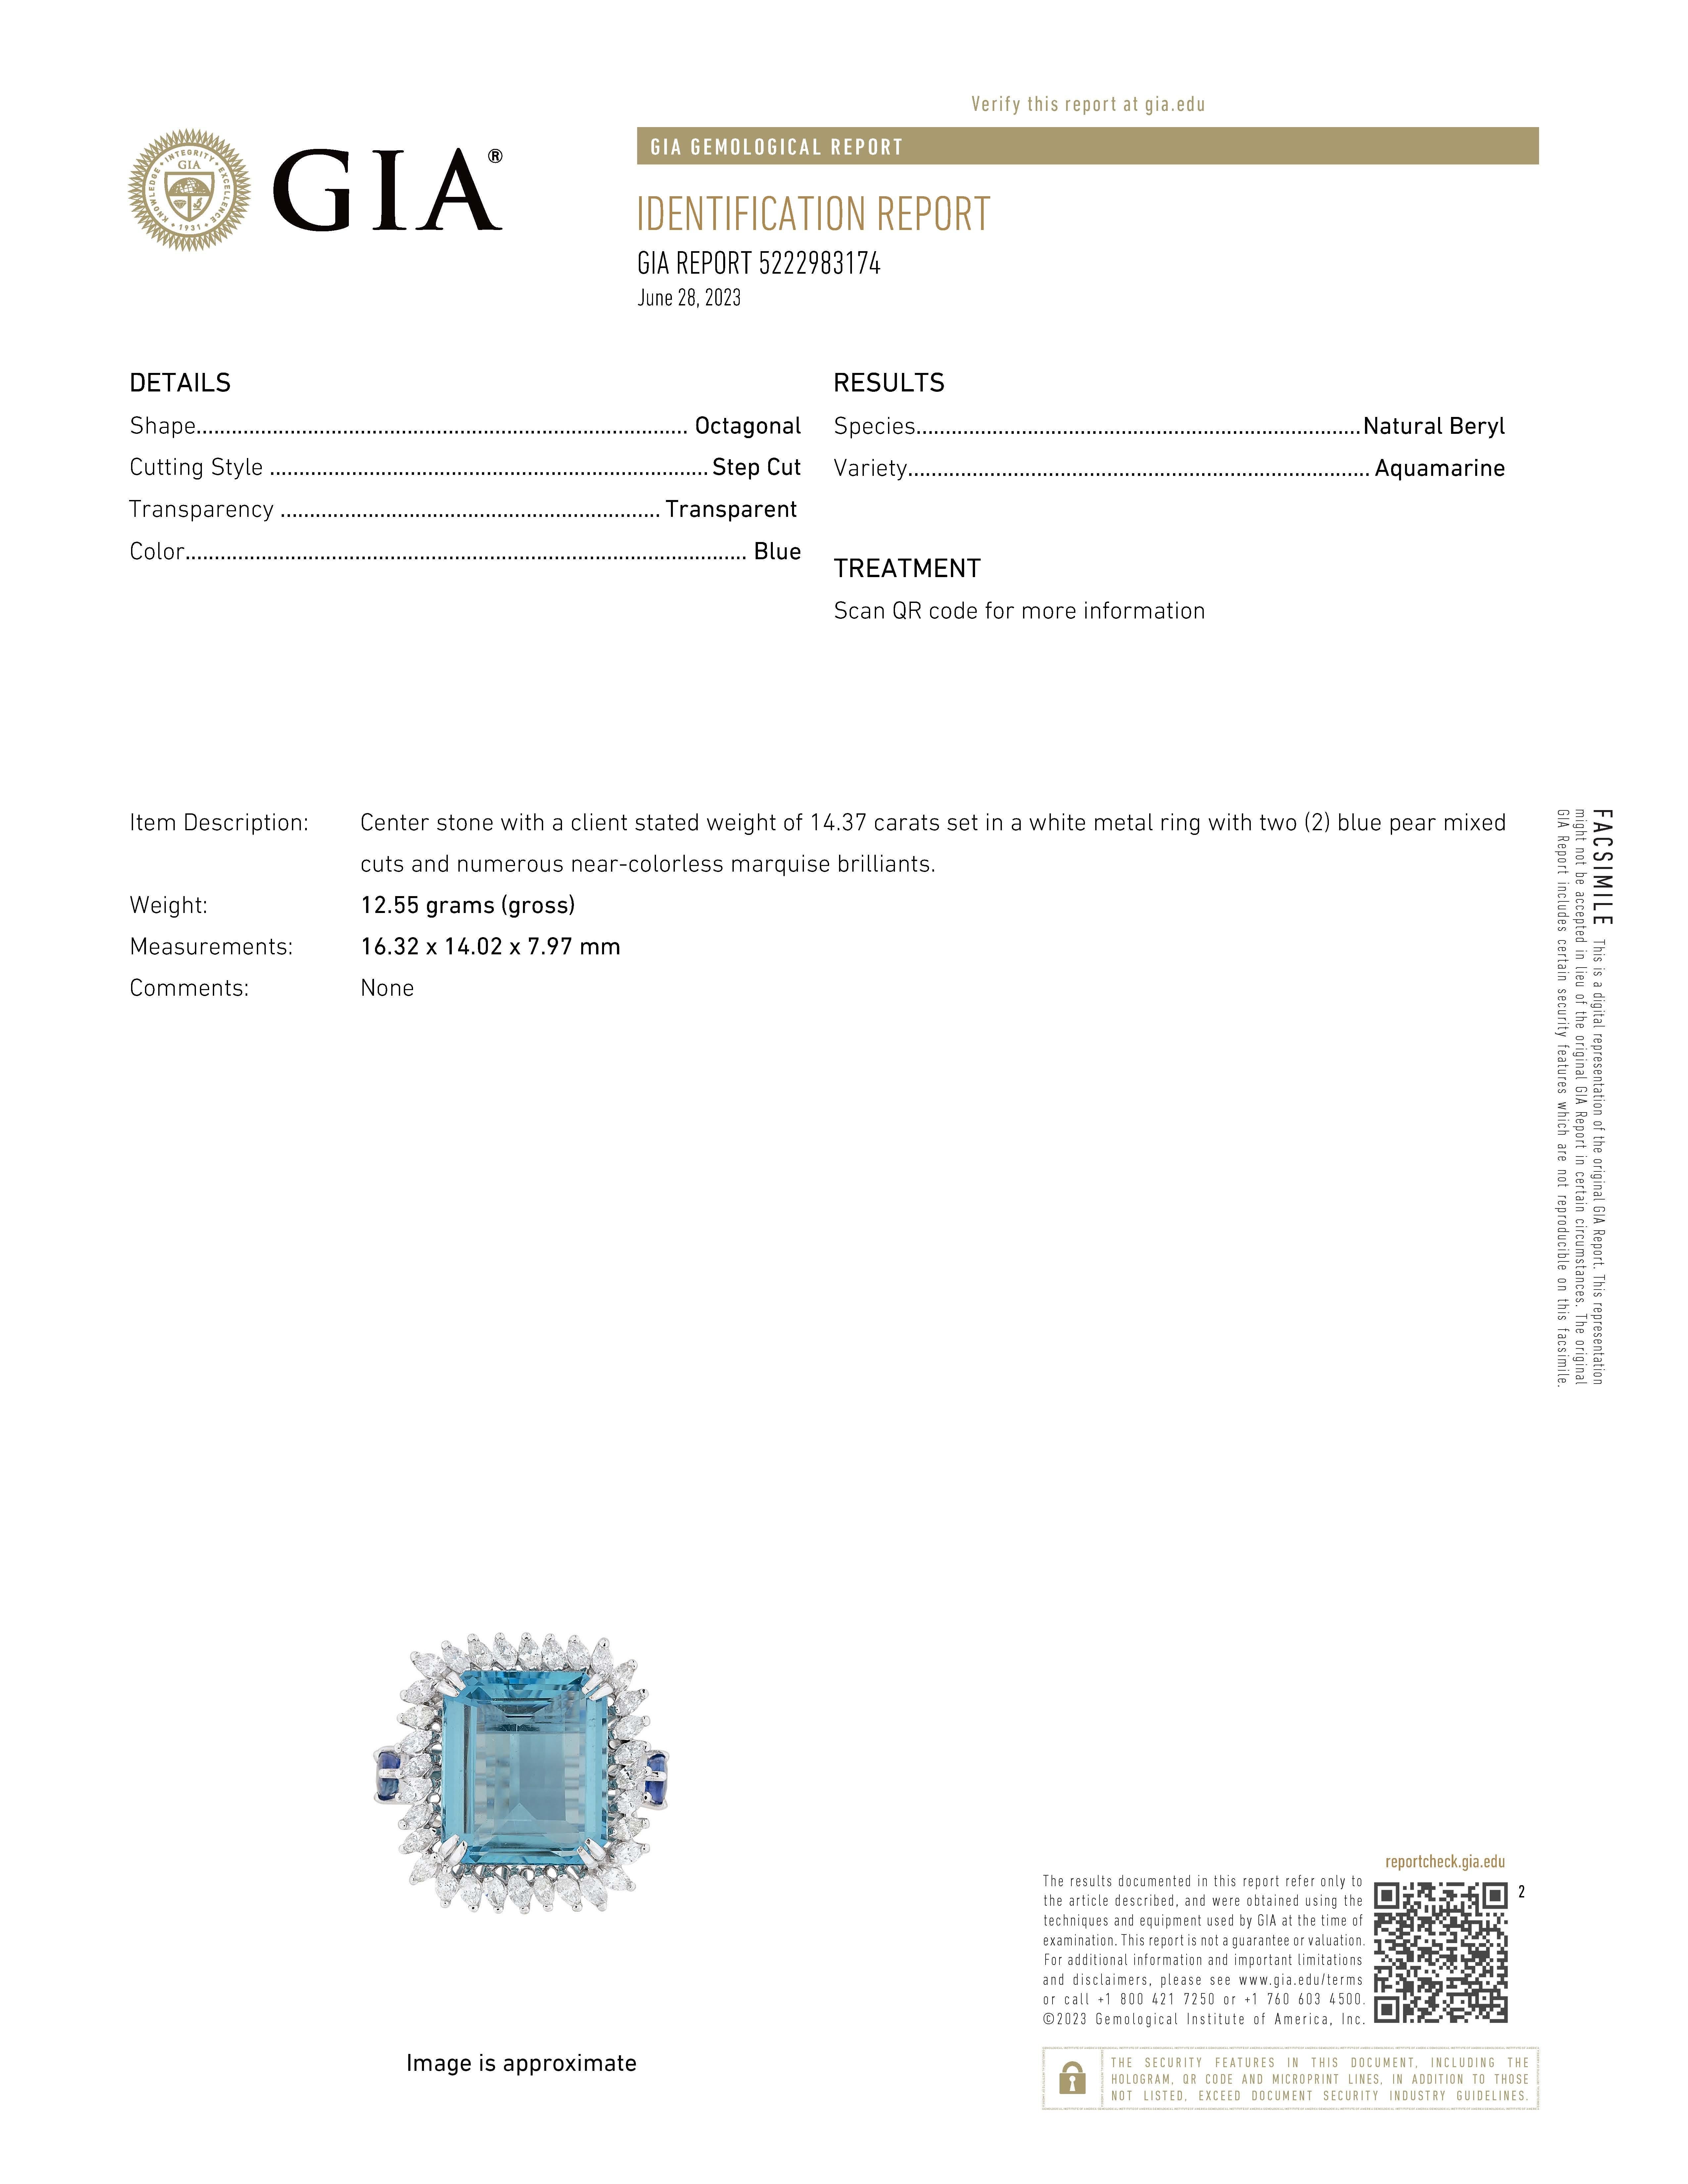 Women's GIA Certified 14.37 Carat Aquamarine and 1.11 Carat Sapphire Diamond Ring For Sale